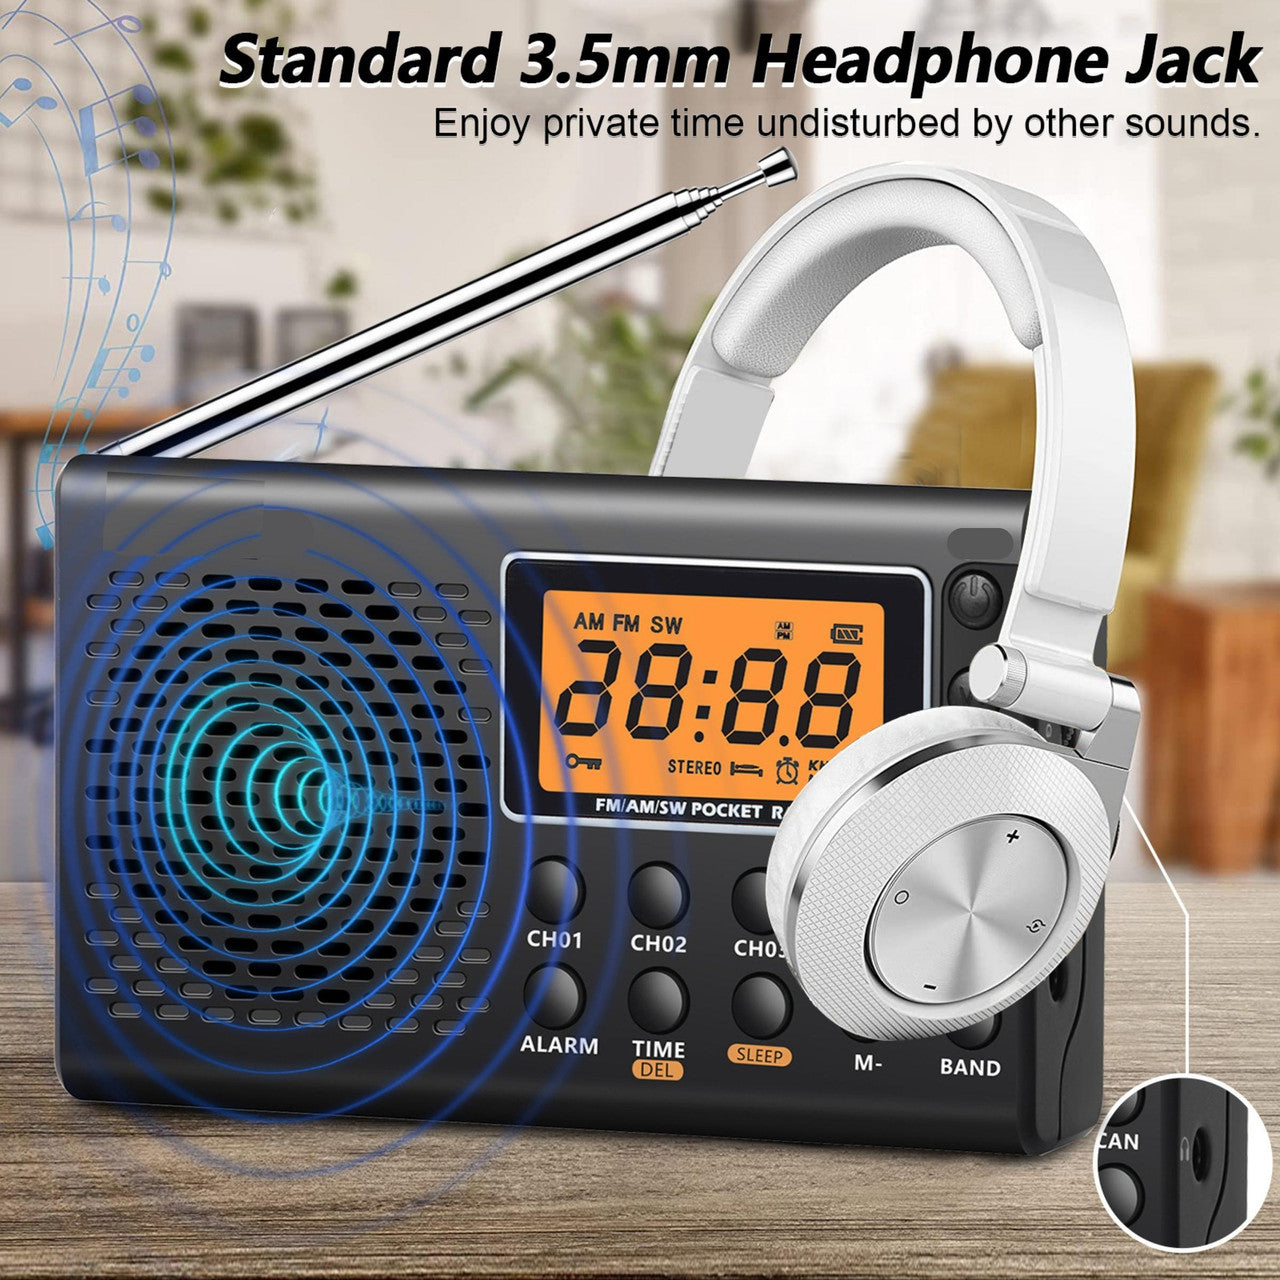 Multi-Band Portable Radio for Support Am/Fm/SW - Shortwave Radios Large LCD Screen USB Speaker Player Walkman 3.5 MM Headphone Jack